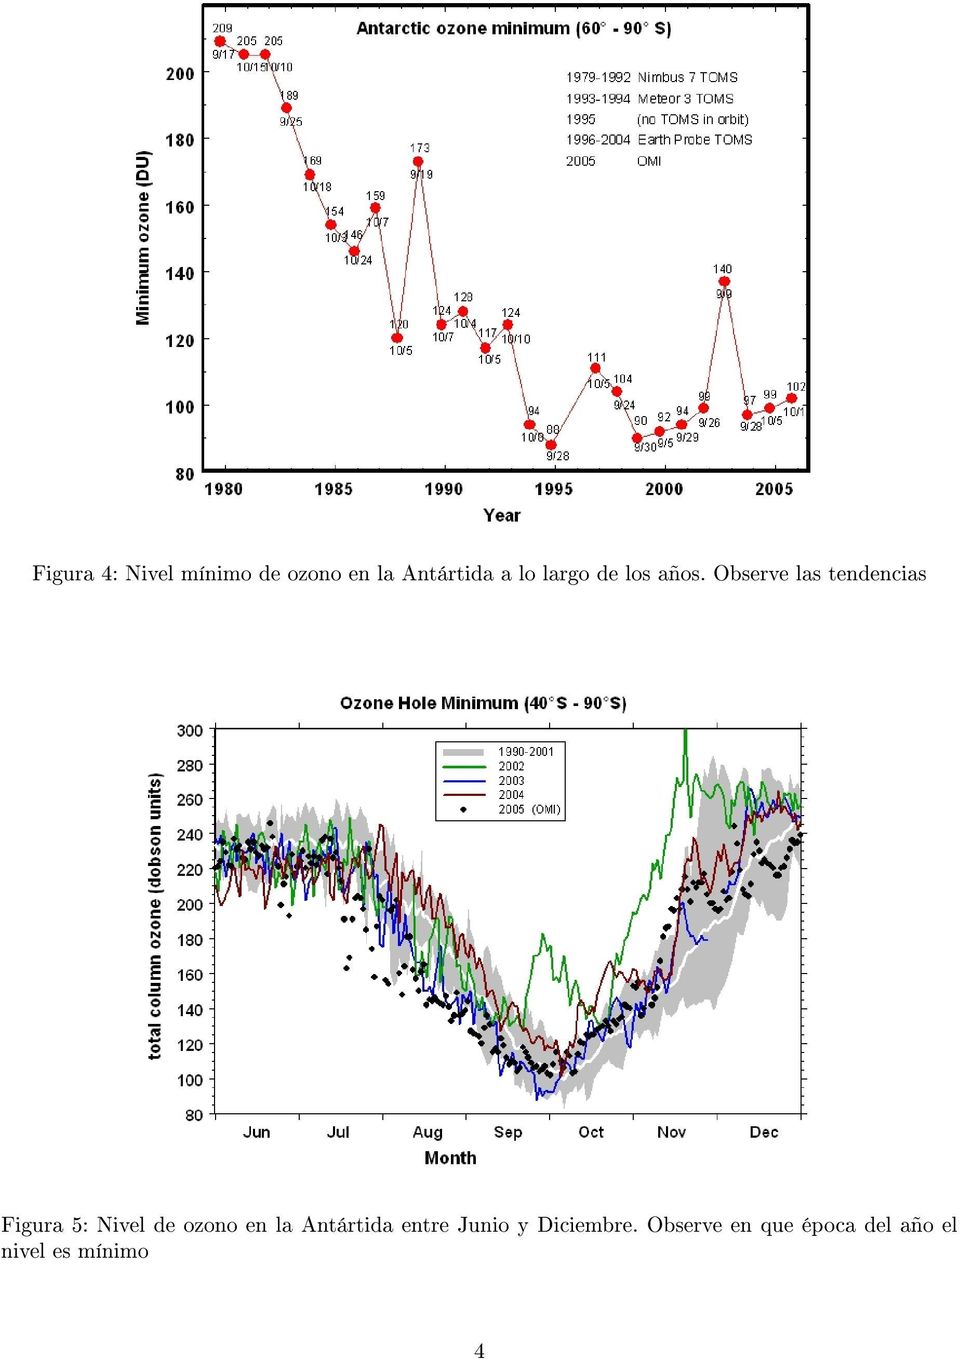 Observe las tendencias Figura 5: Nivel de ozono en